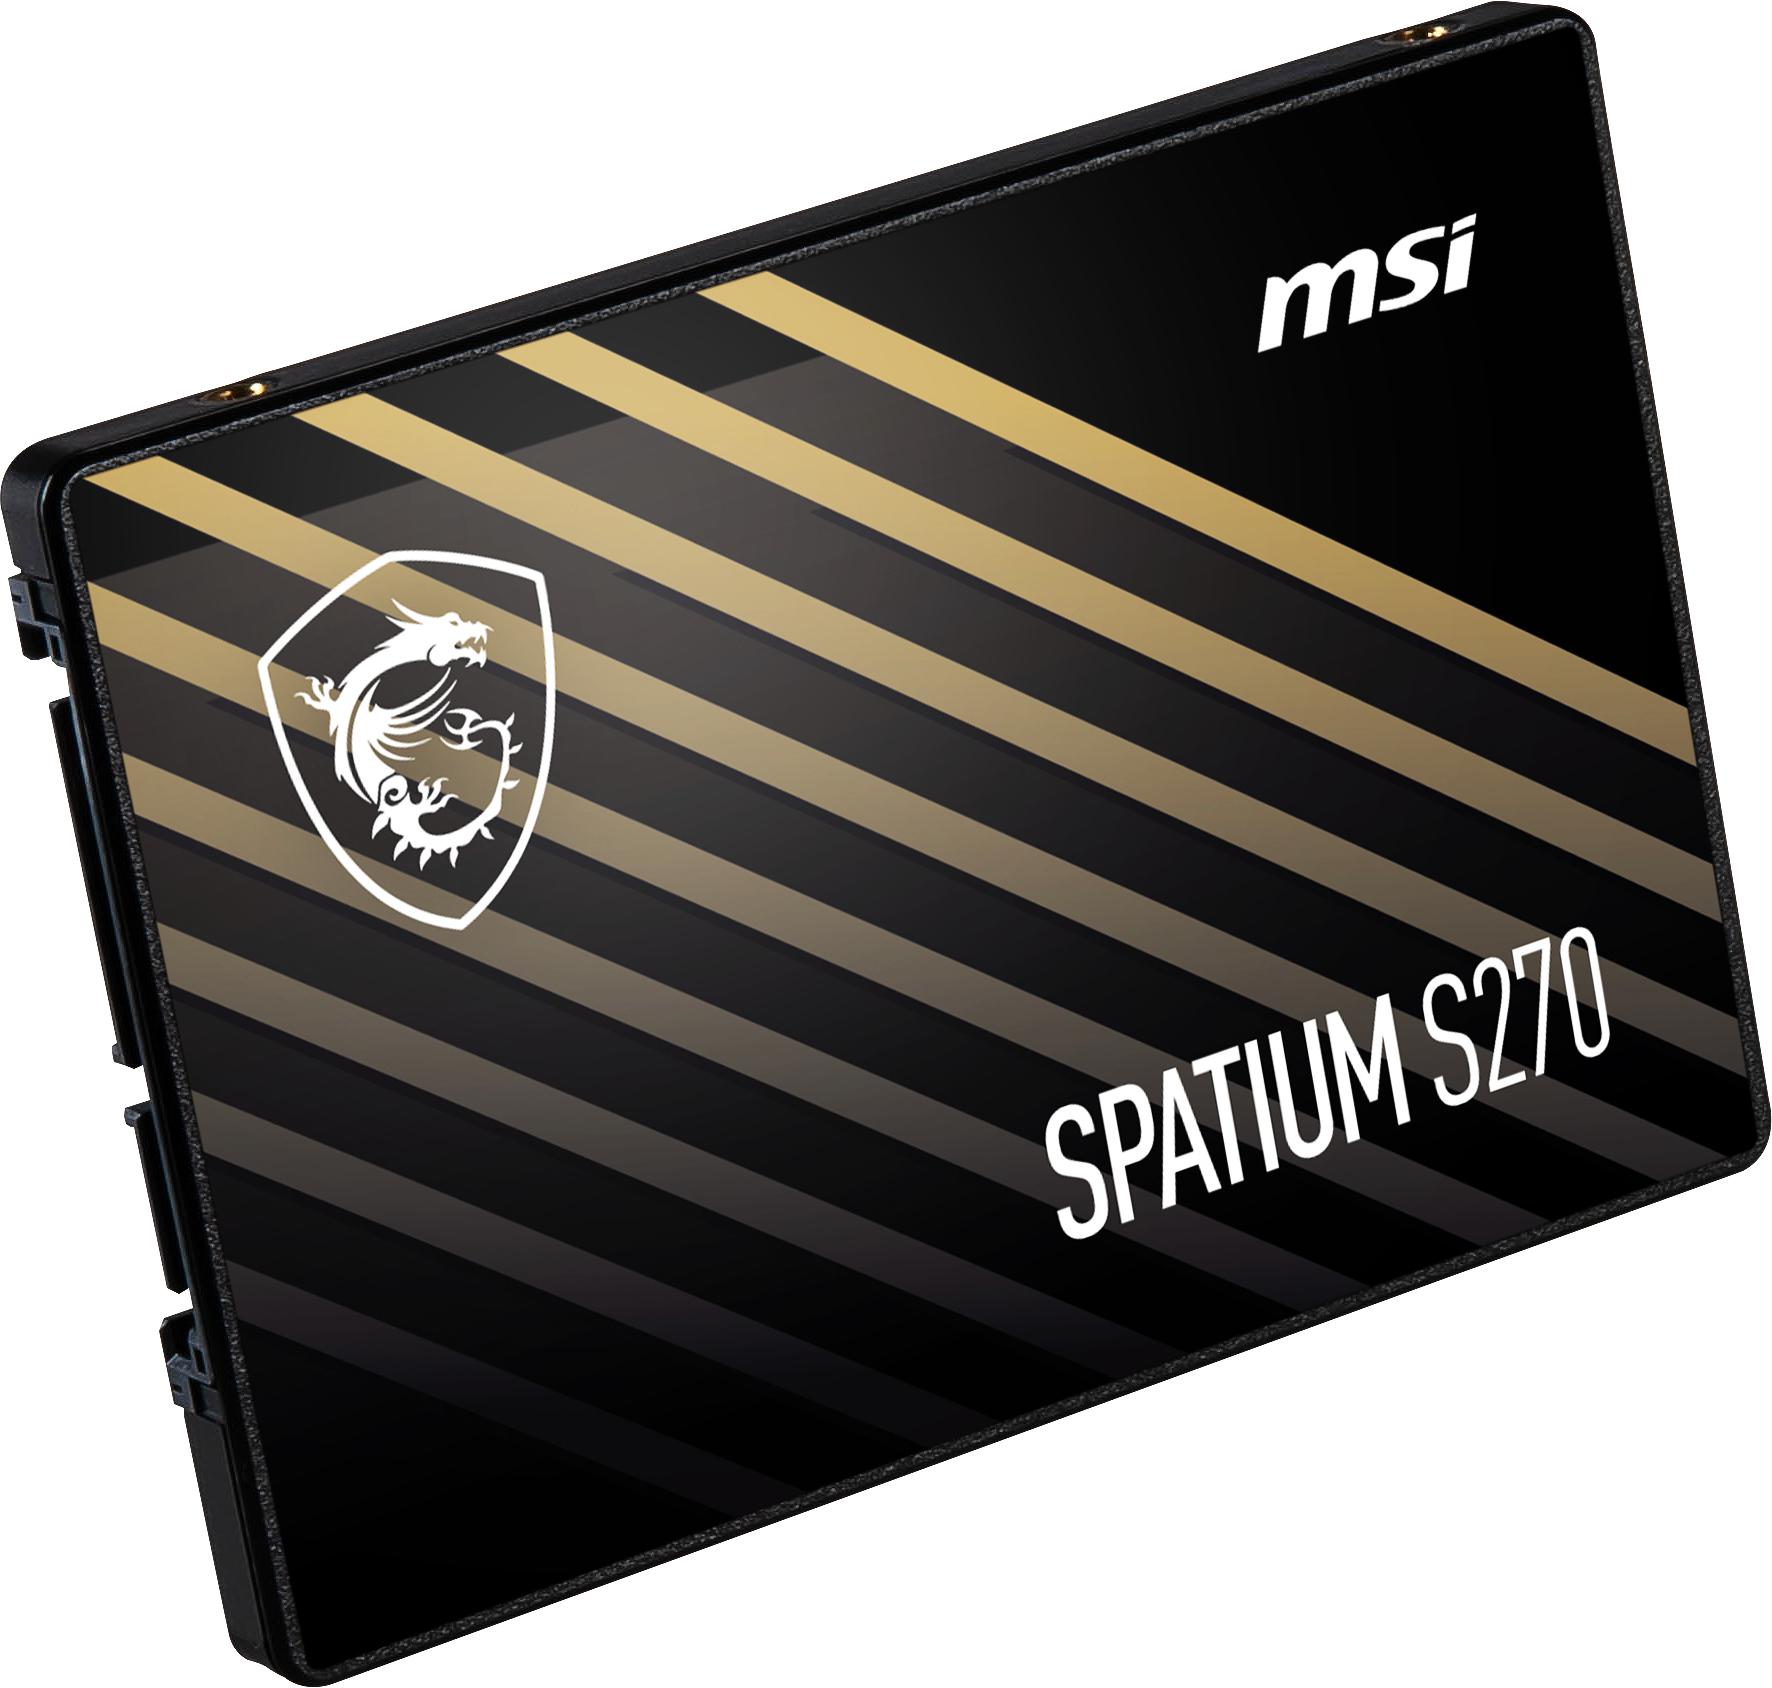 MSI - SSD MSI SPATIUM S270 480GB SATA IIII (500/450MB/s)